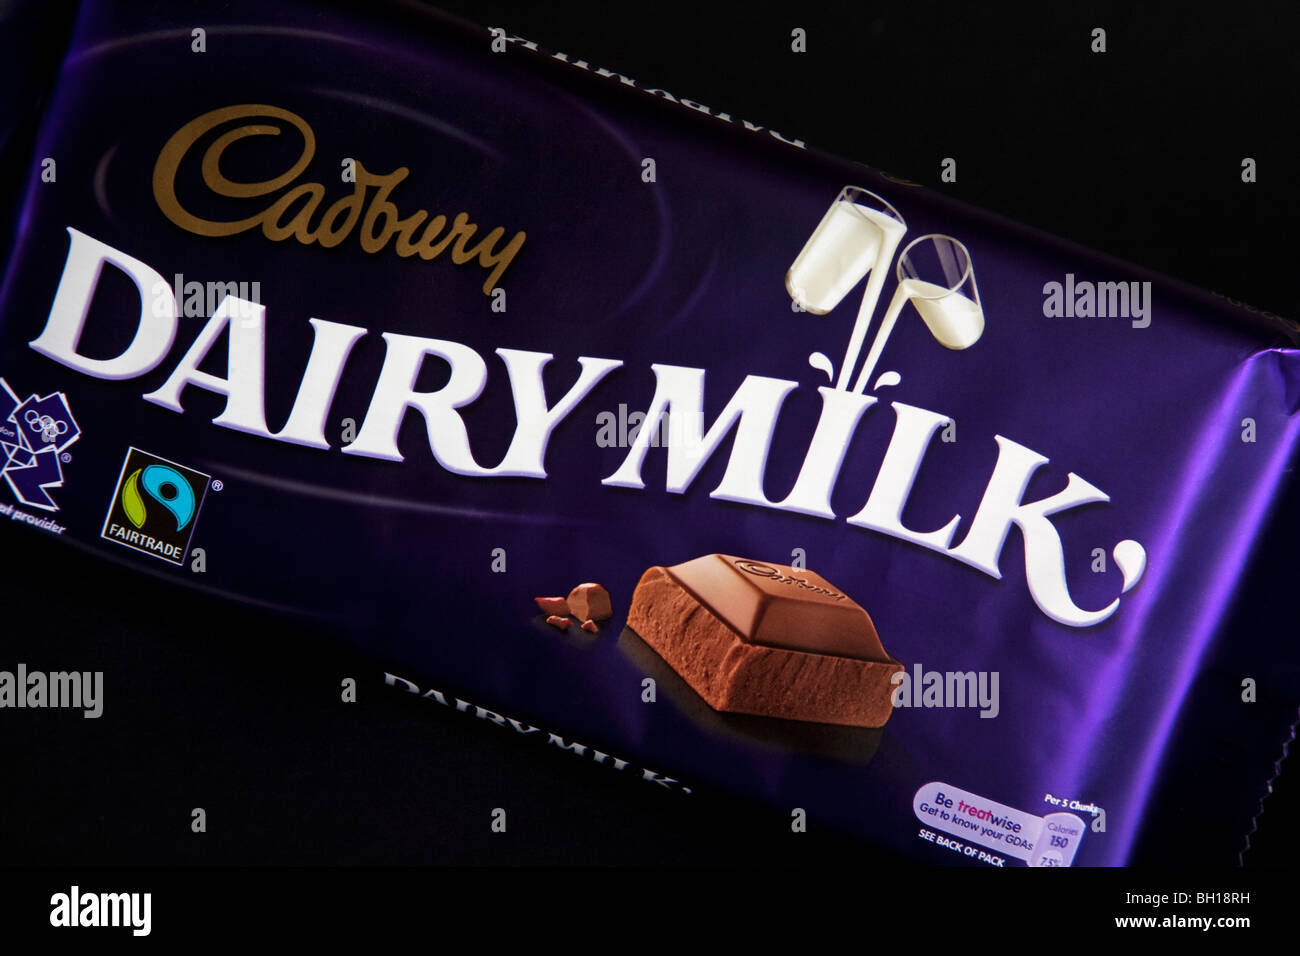 A 230g bar of Cadbury's Dairy Milk chocolate. Stock Photo